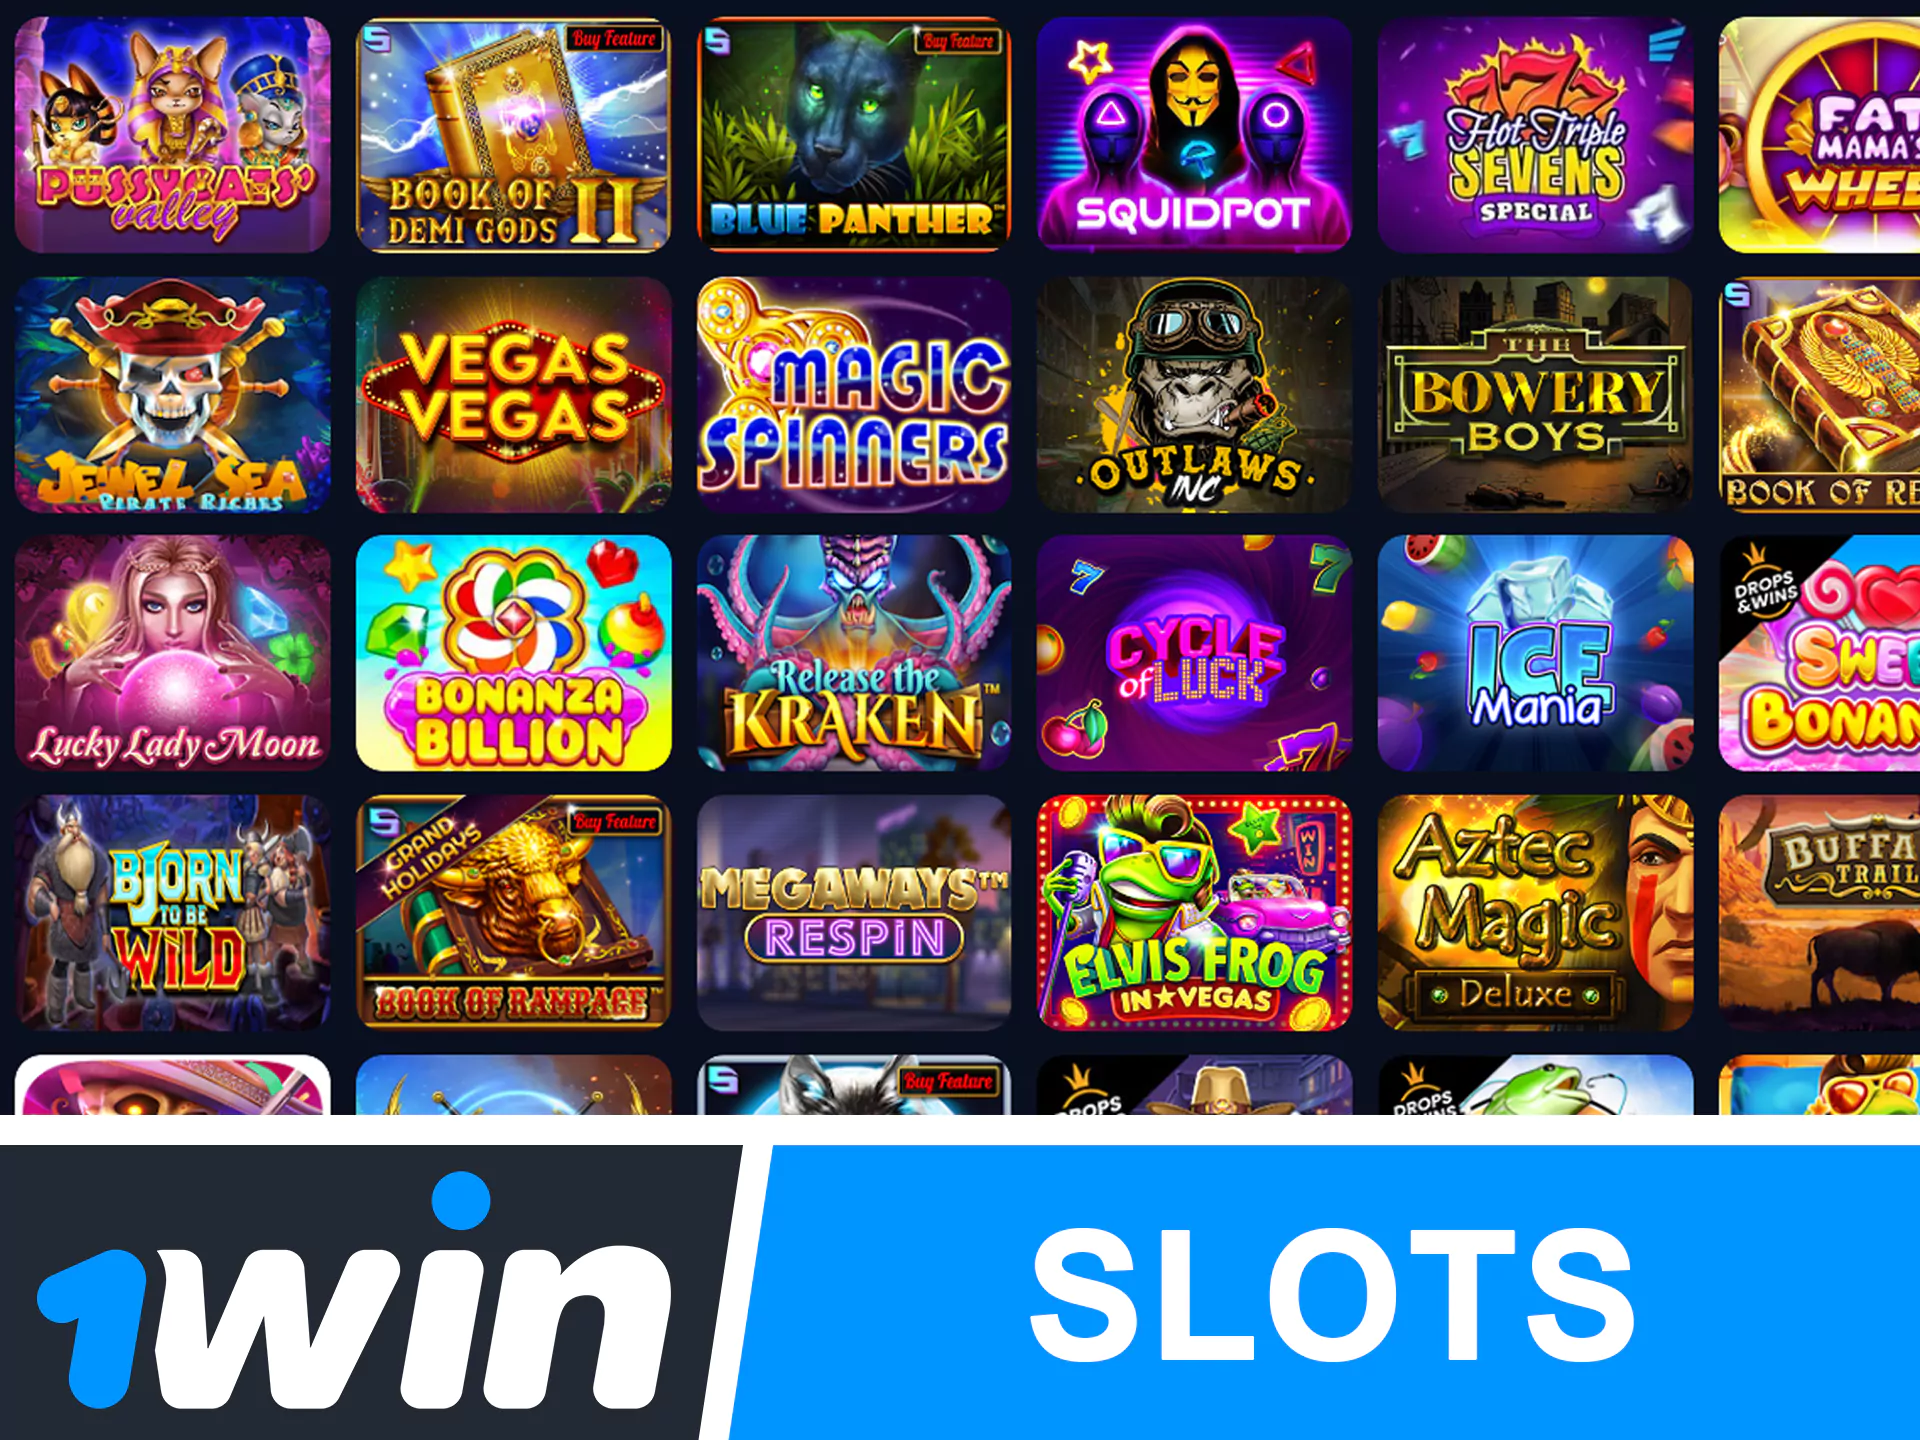 Spin slots at 1win and win big prizes.